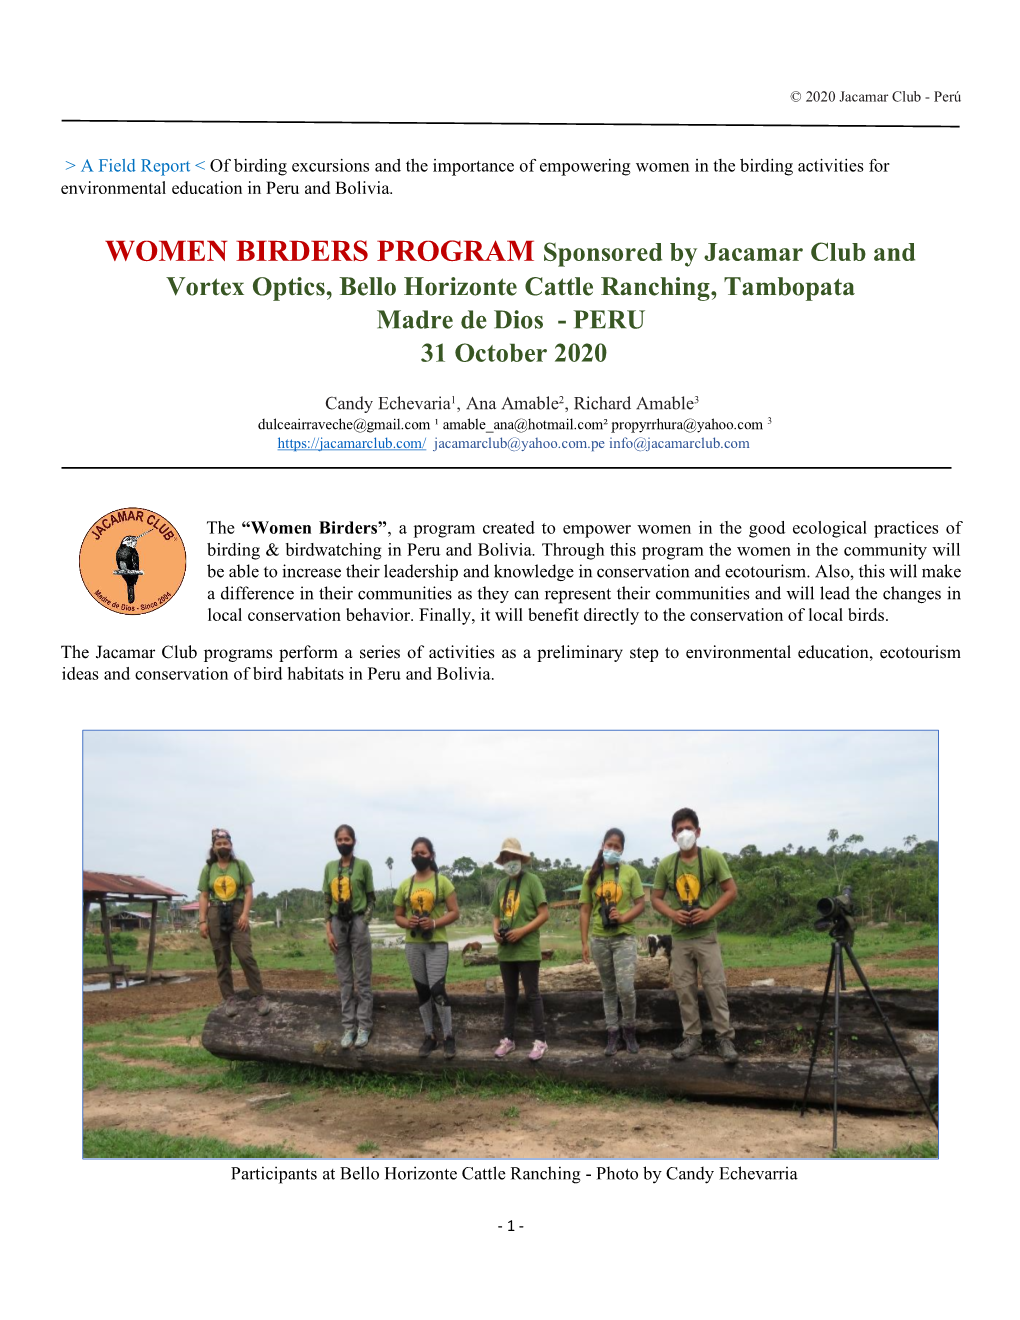 WOMEN BIRDERS PROGRAM Sponsored by Jacamar Club and Vortex Optics, Bello Horizonte Cattle Ranching, Tambopata Madre De Dios - PERU 31 October 2020